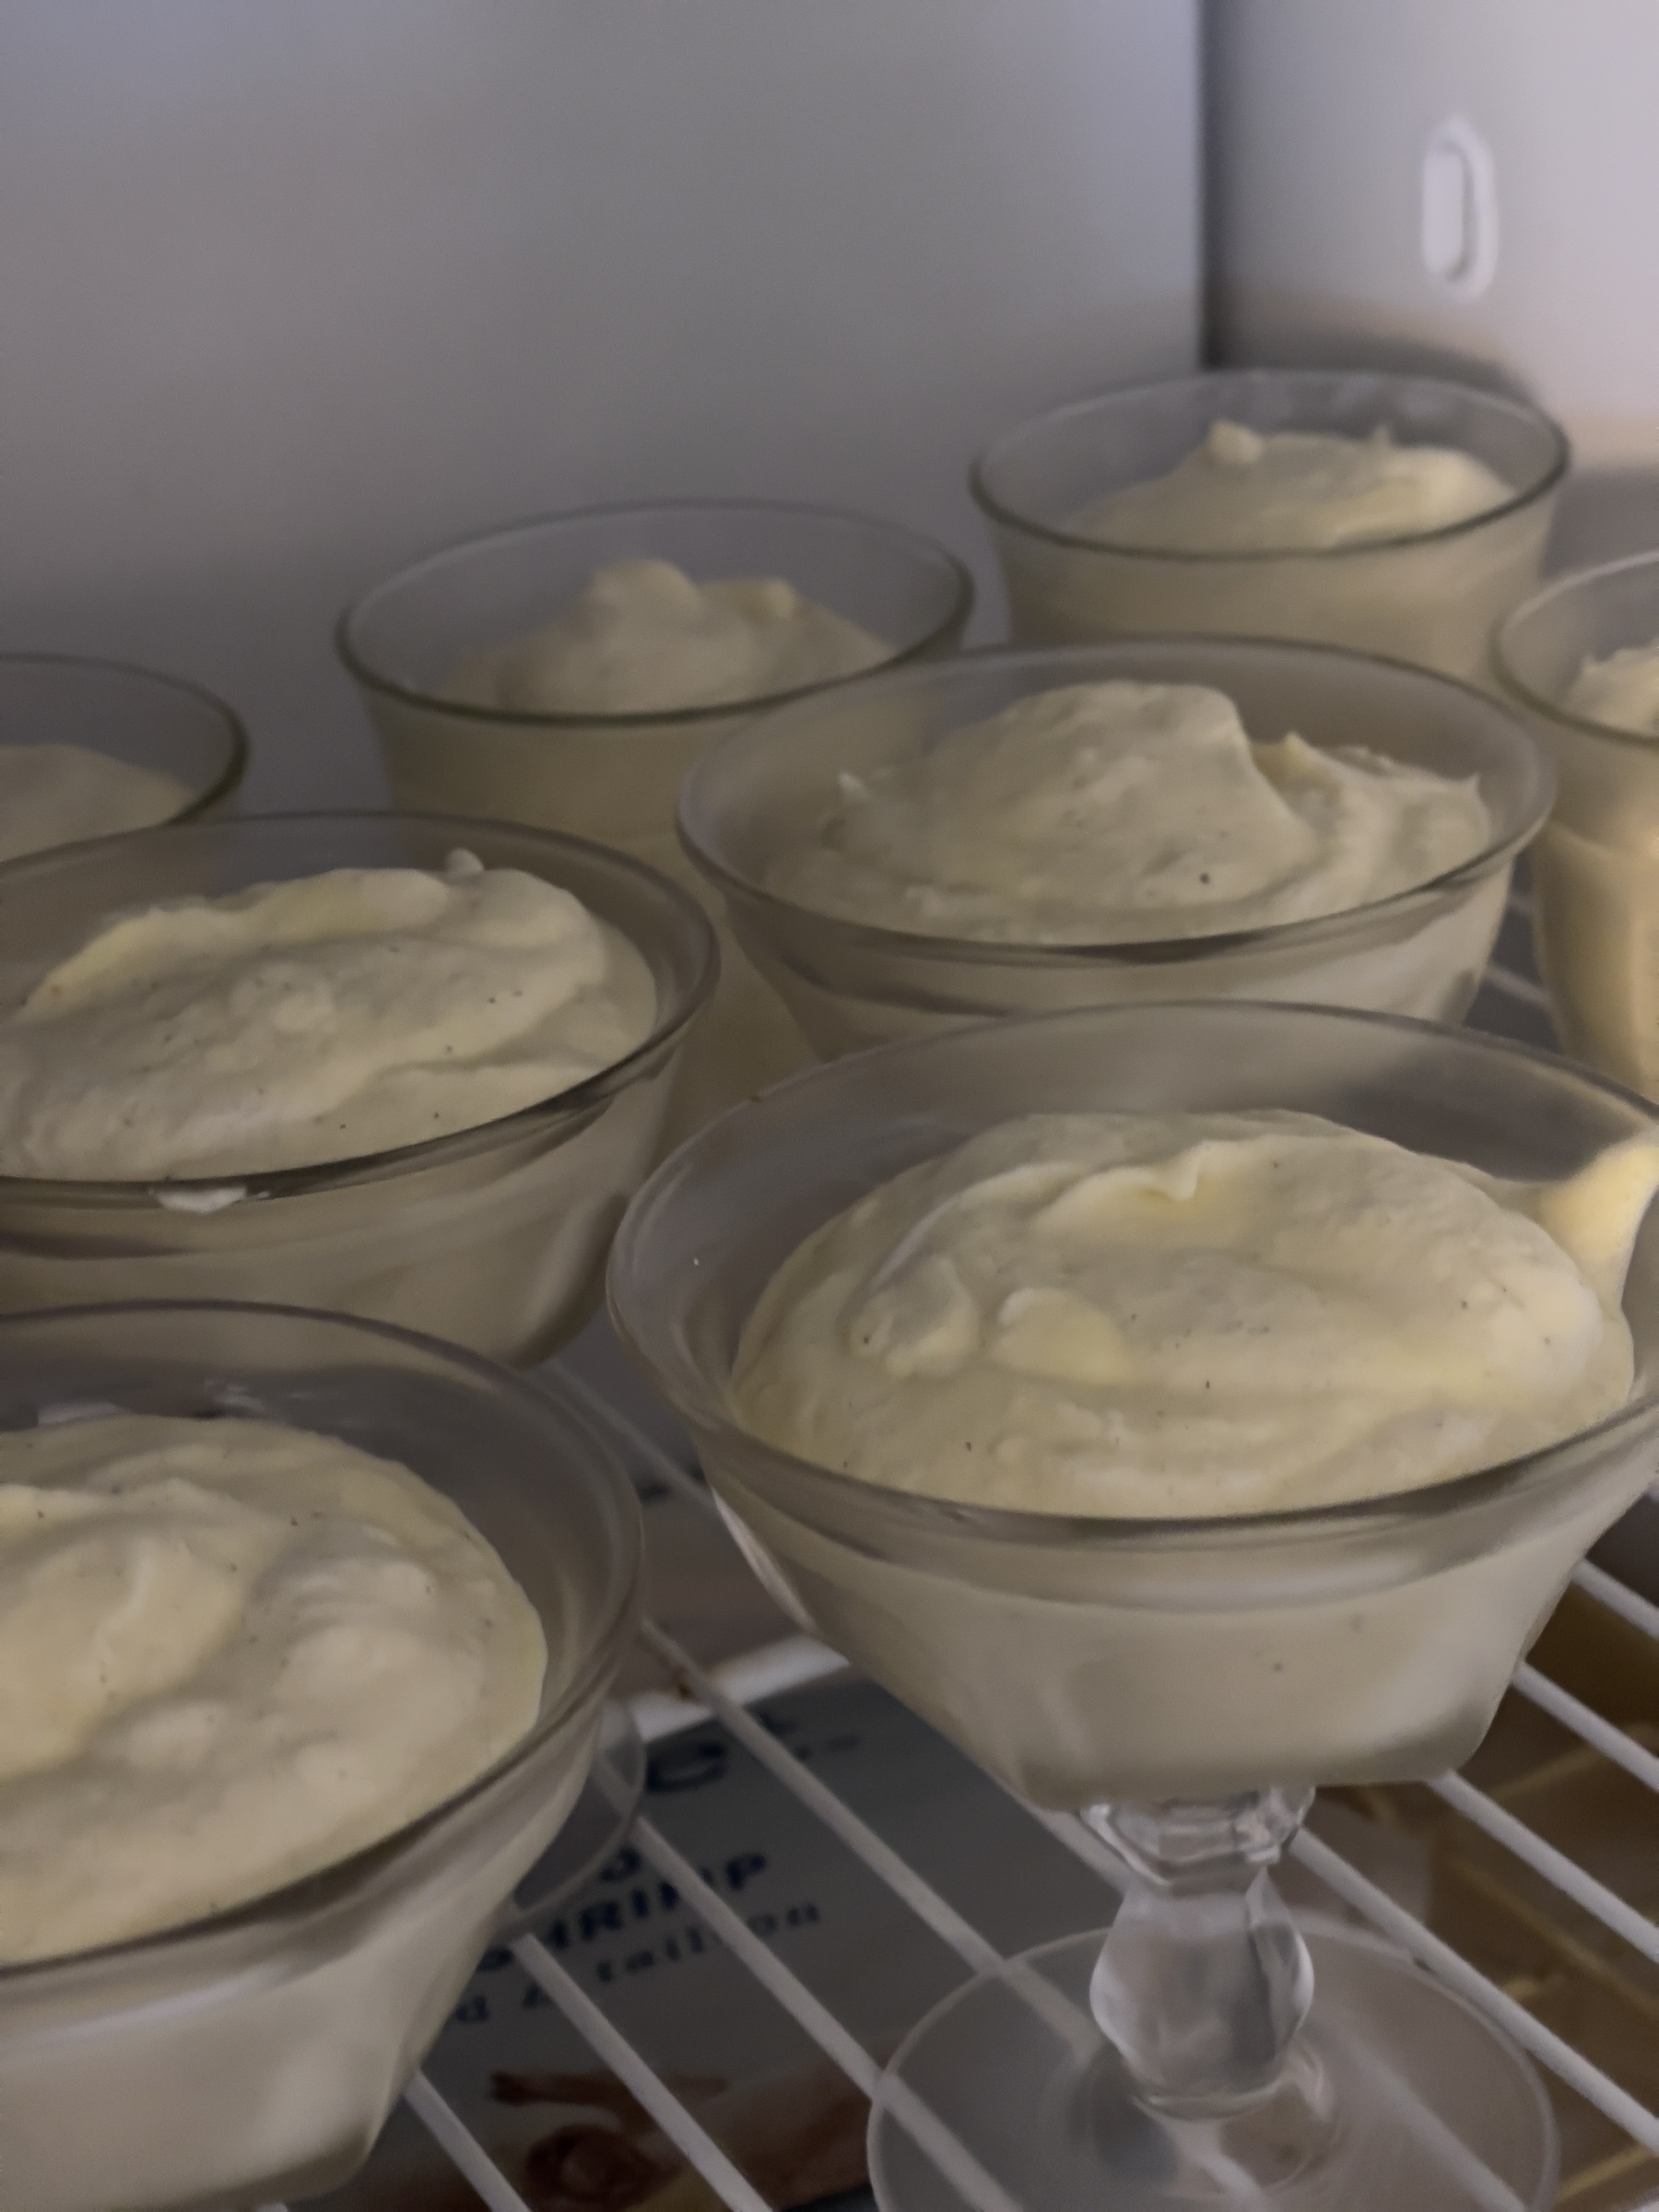 Frozen soufflés in glass desert glasses in the freezer.